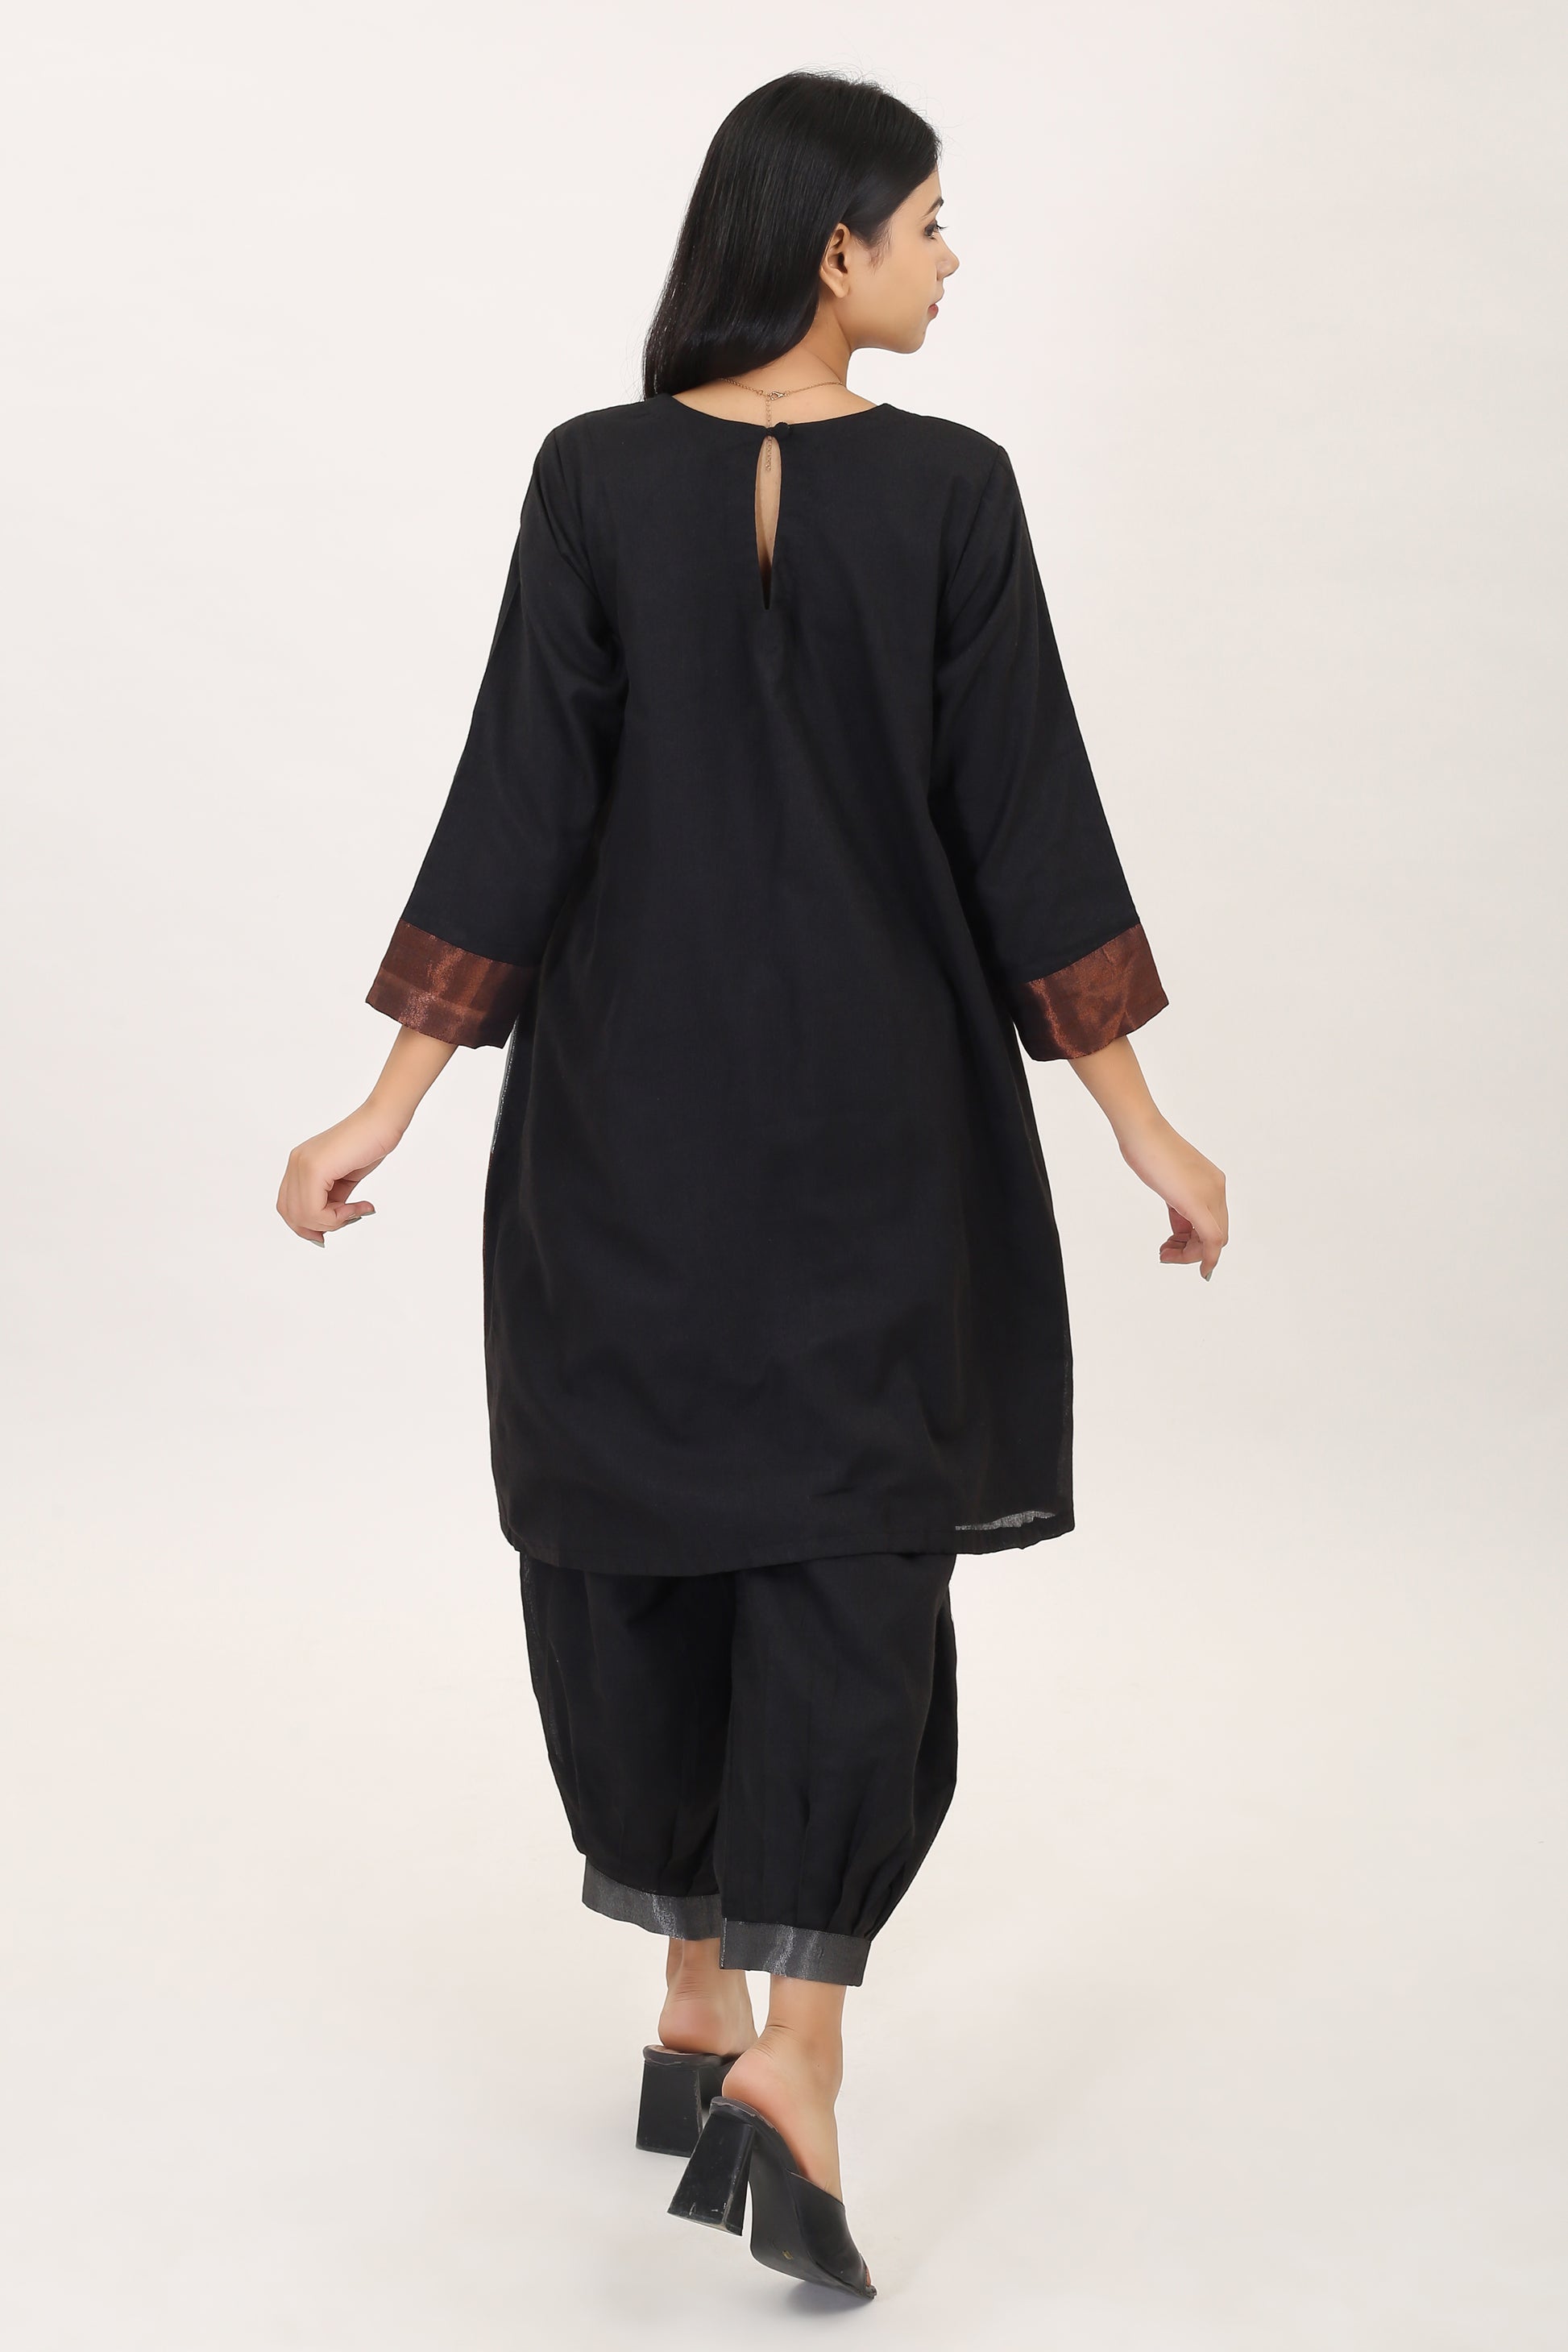 KAALI: Handwoven cotton zari kurta sets - SIMPLY KITSCH